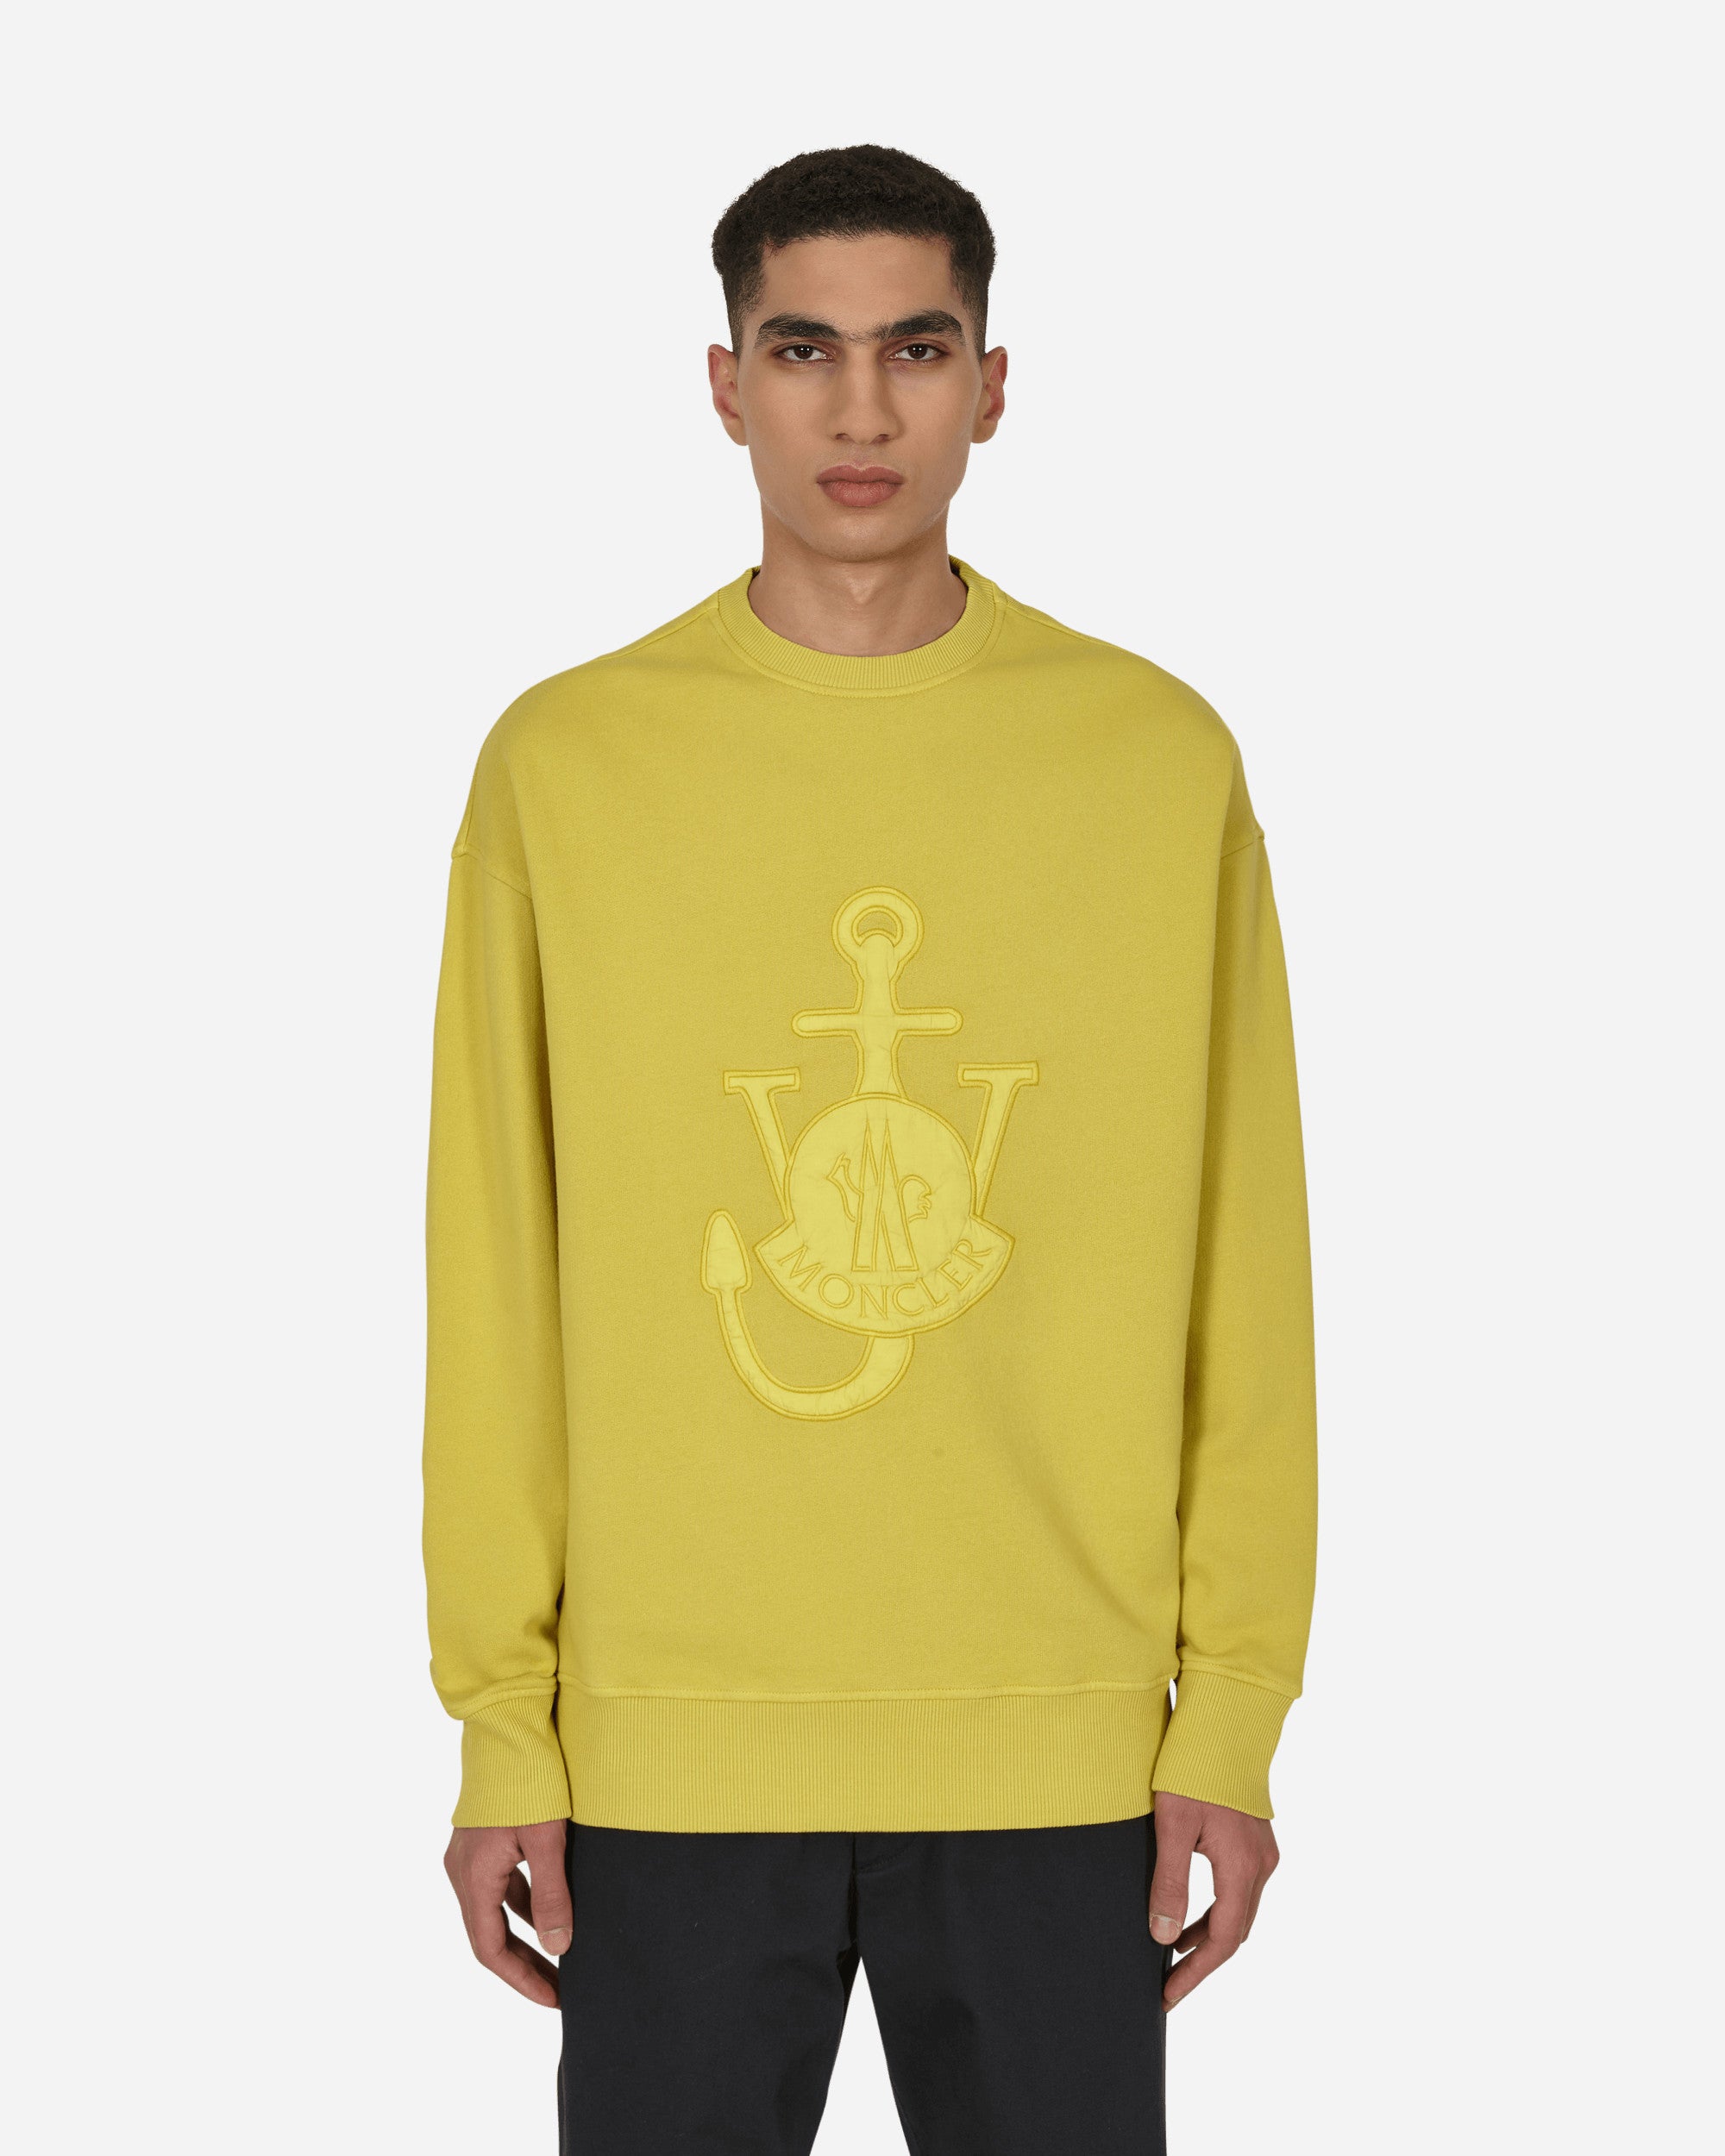 Moncler Genius Jwa Garment Dyed Crewneck With Jwa Logo Light Yellow Sweatshirts Crewneck H209E8G00008 112